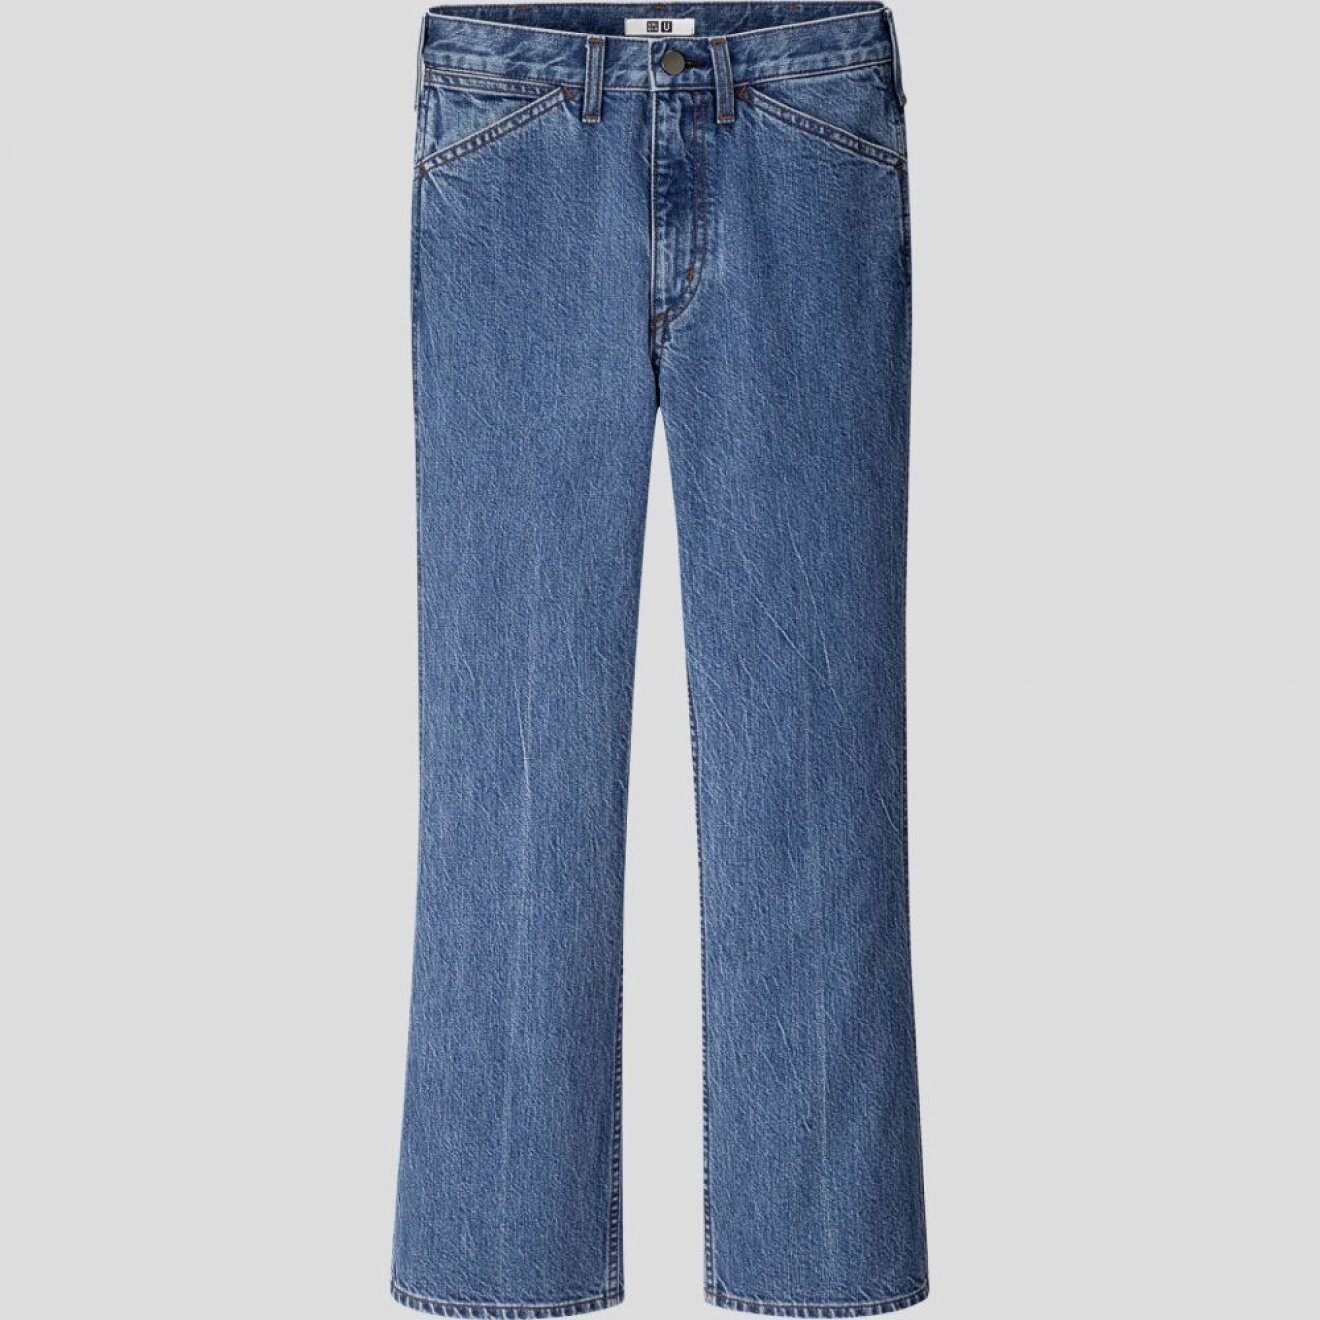 Uniqlo U höstkollektion 2019, blåa jeans